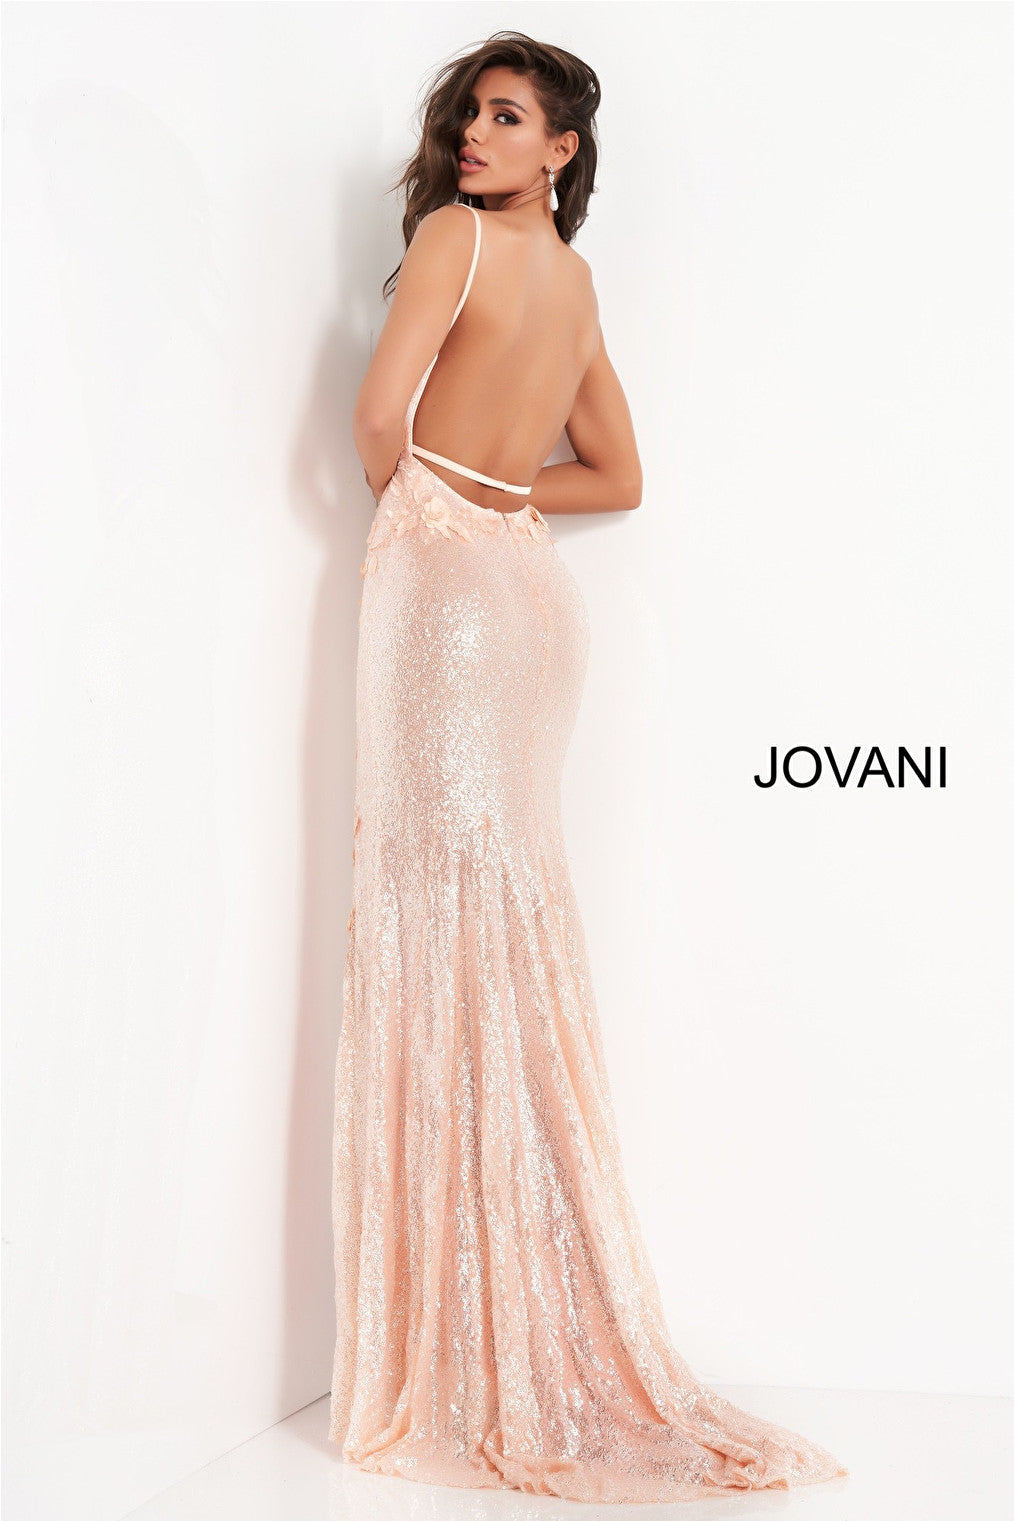 Jovani 1012 ice pink backless dress